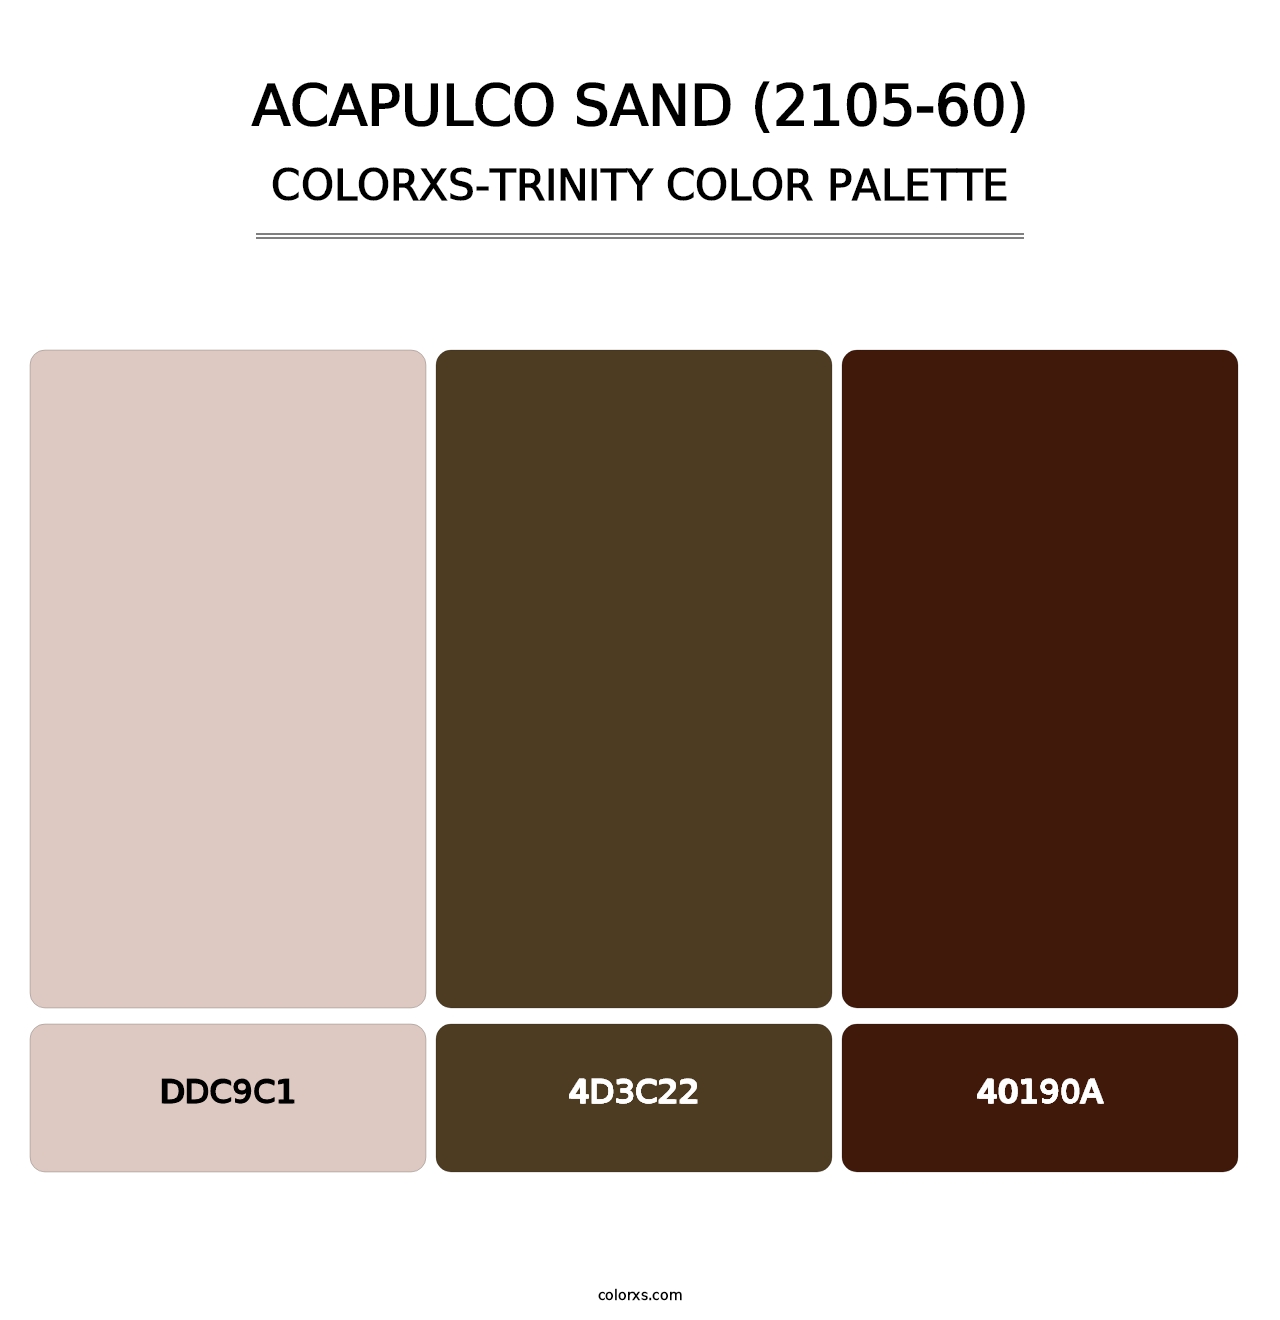 Acapulco Sand (2105-60) - Colorxs Trinity Palette